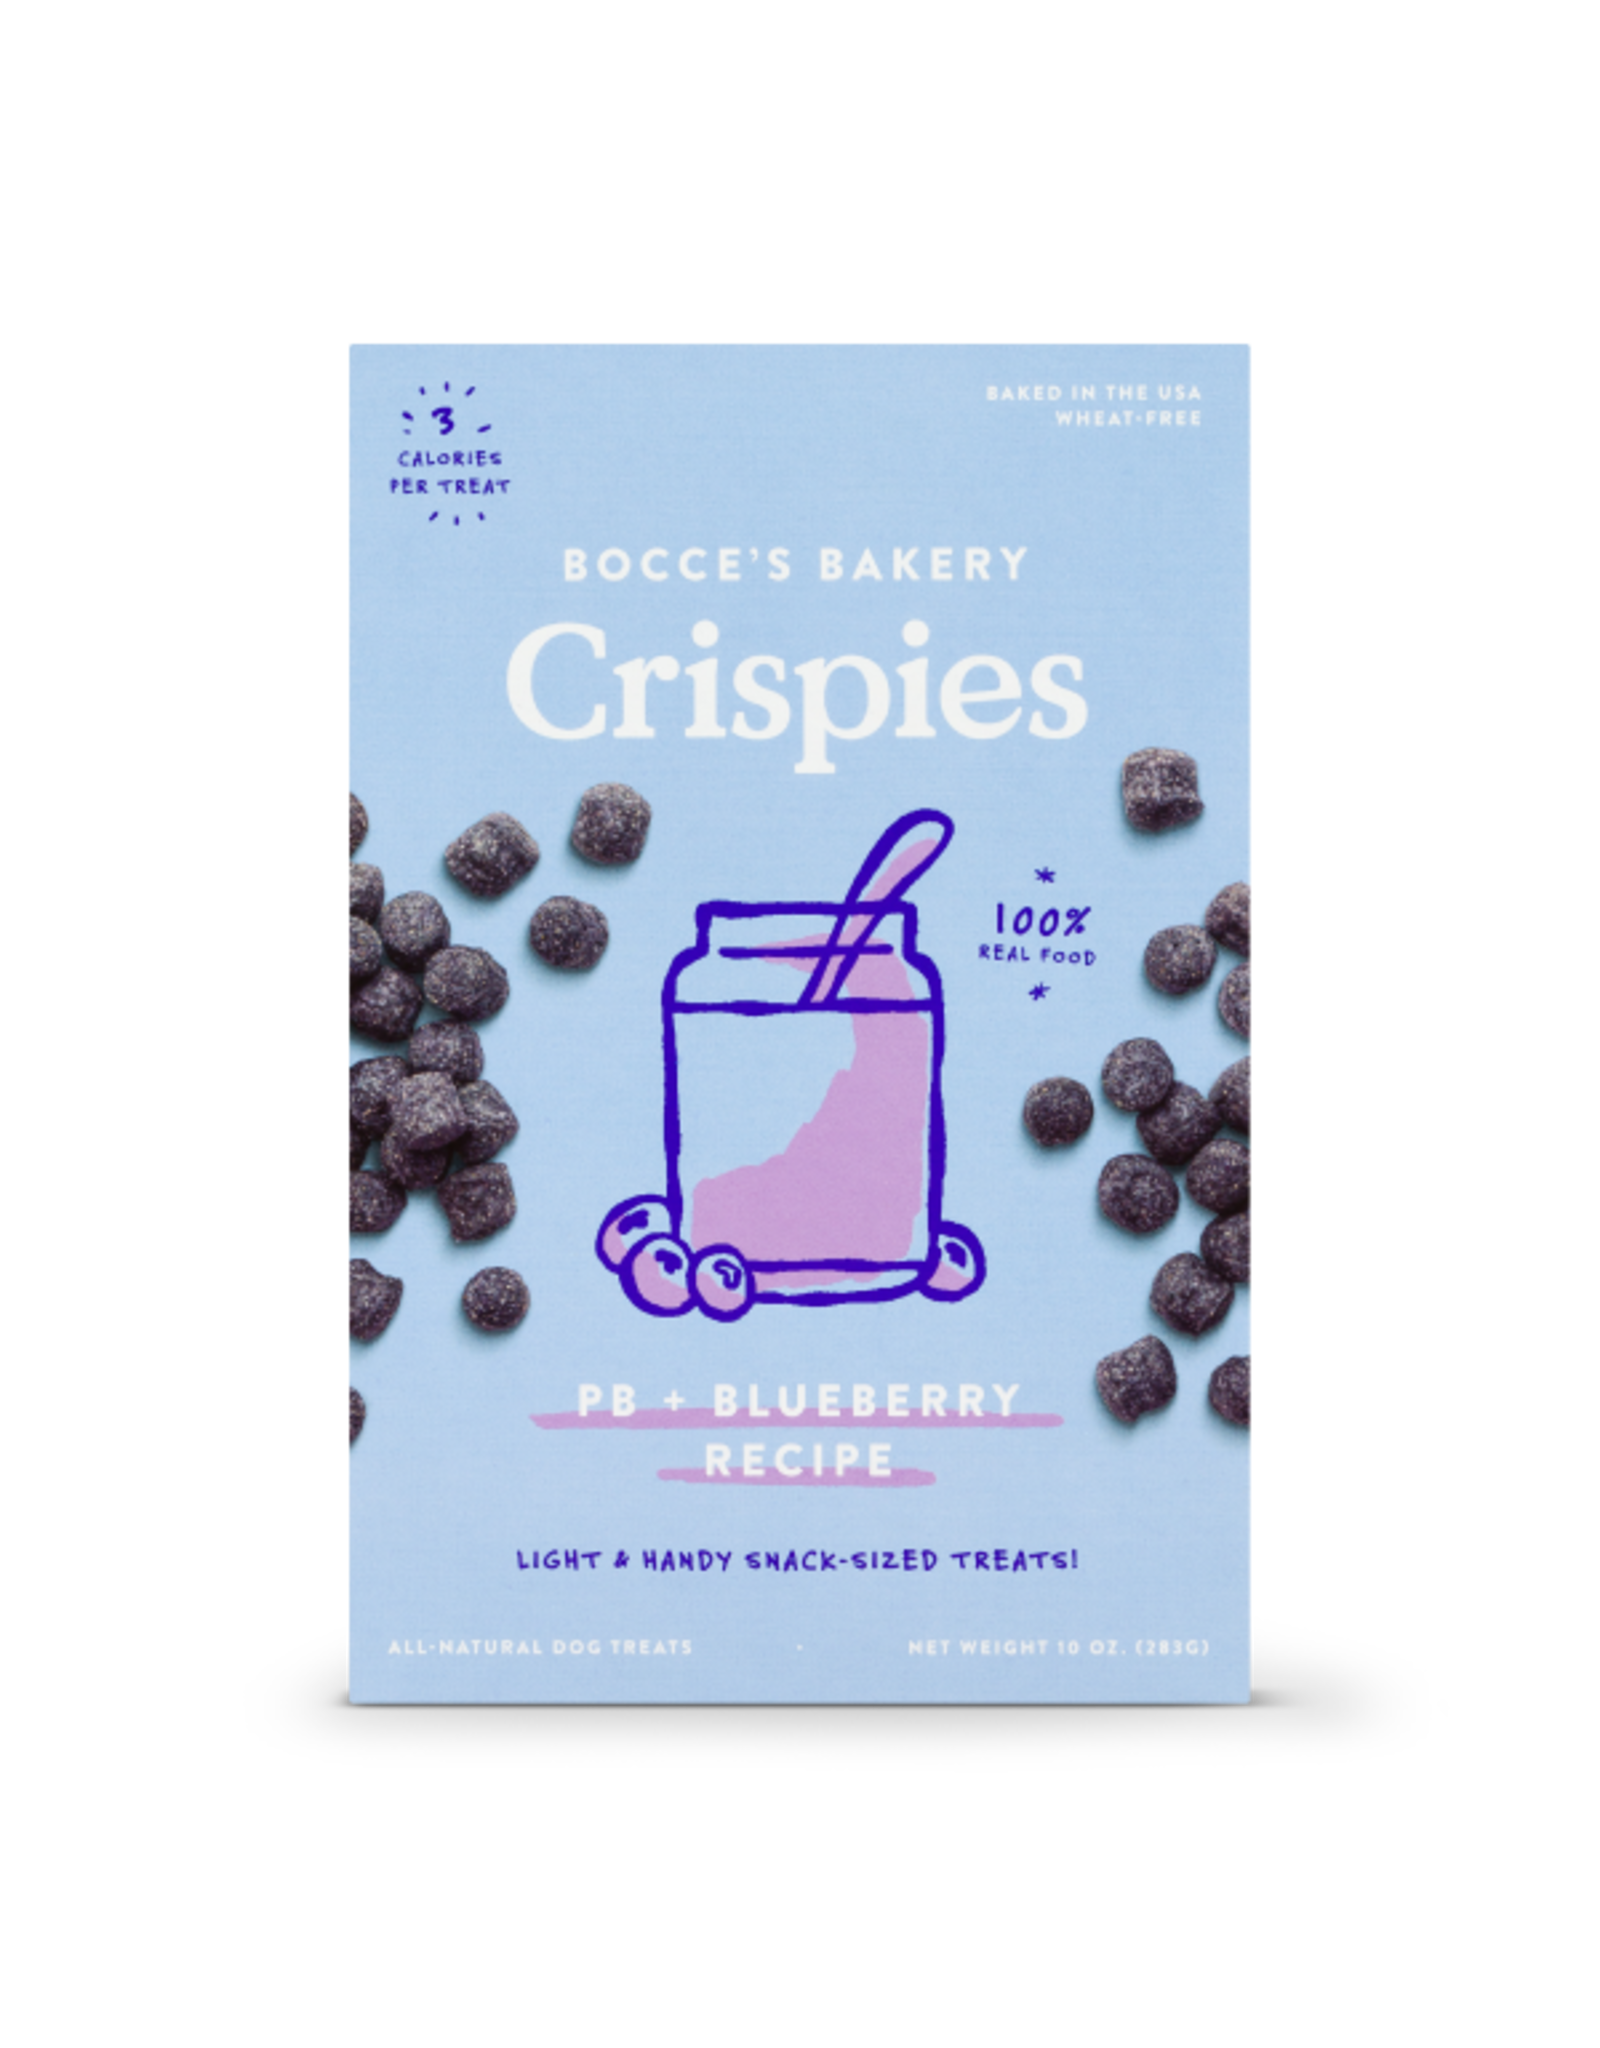 Bocce's Bakery Crispies PB + Blueberry 10 oz